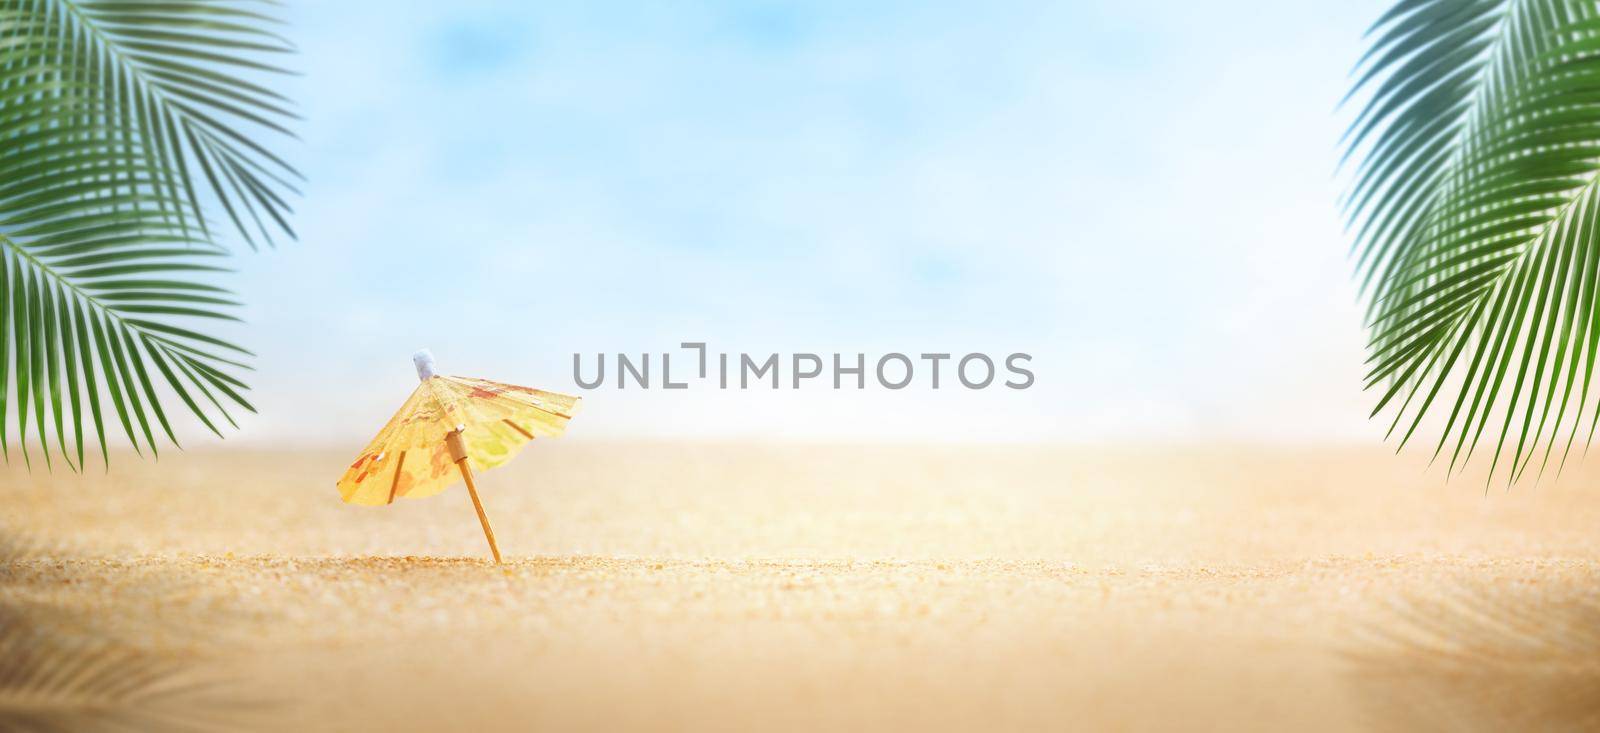 Beach mini umbrella with palm leaves, Summer on the beach concept